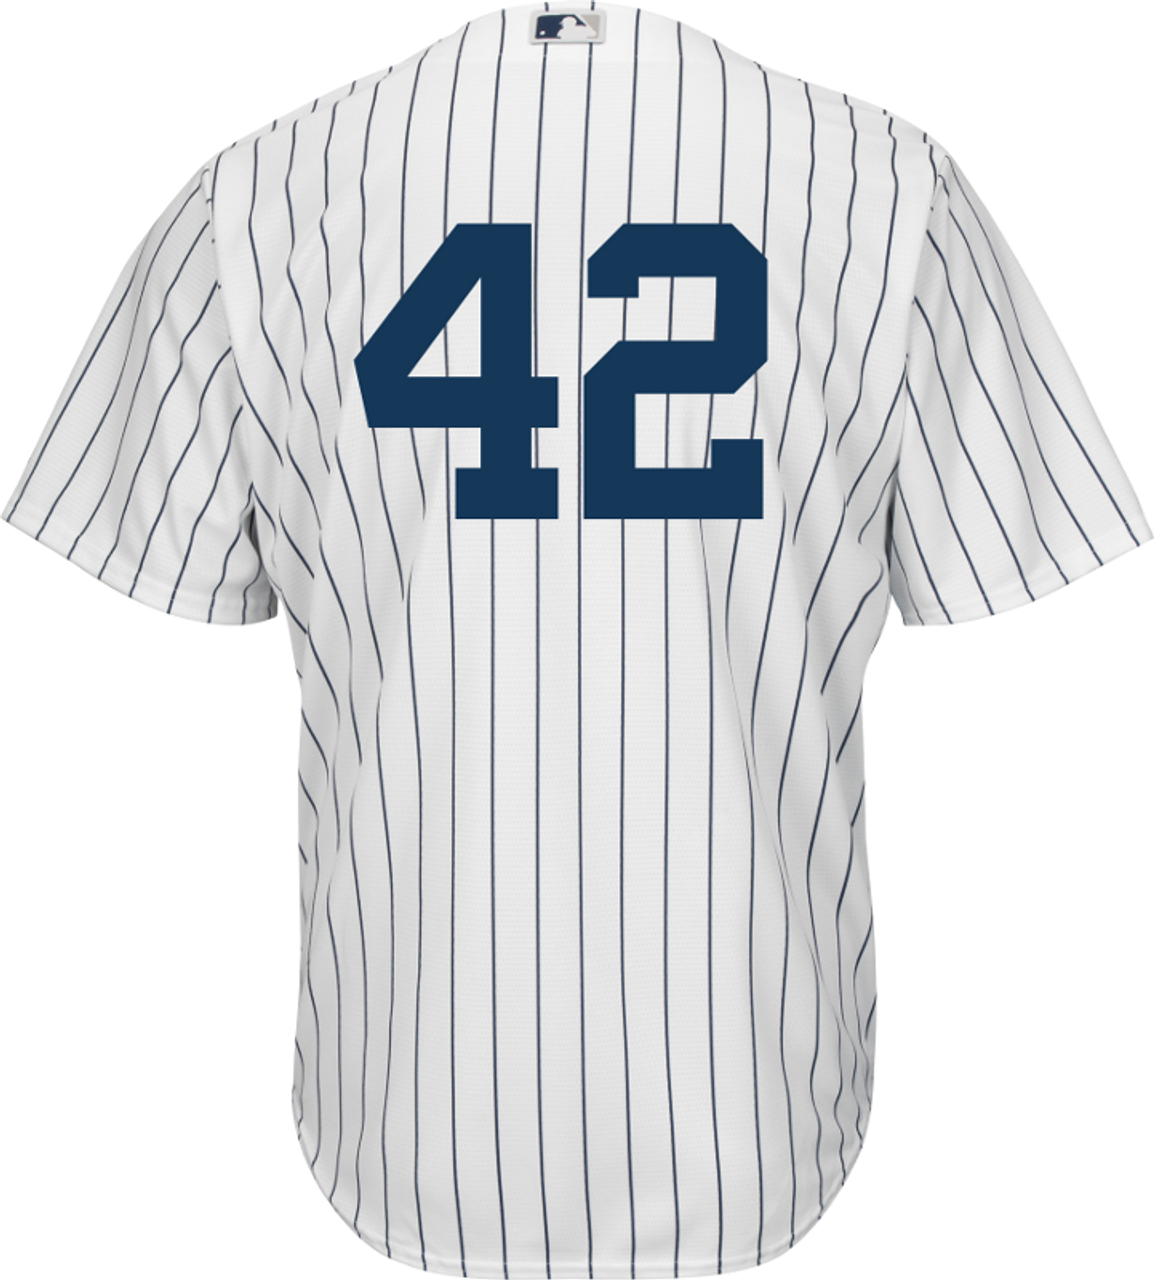 baseball jersey number 42